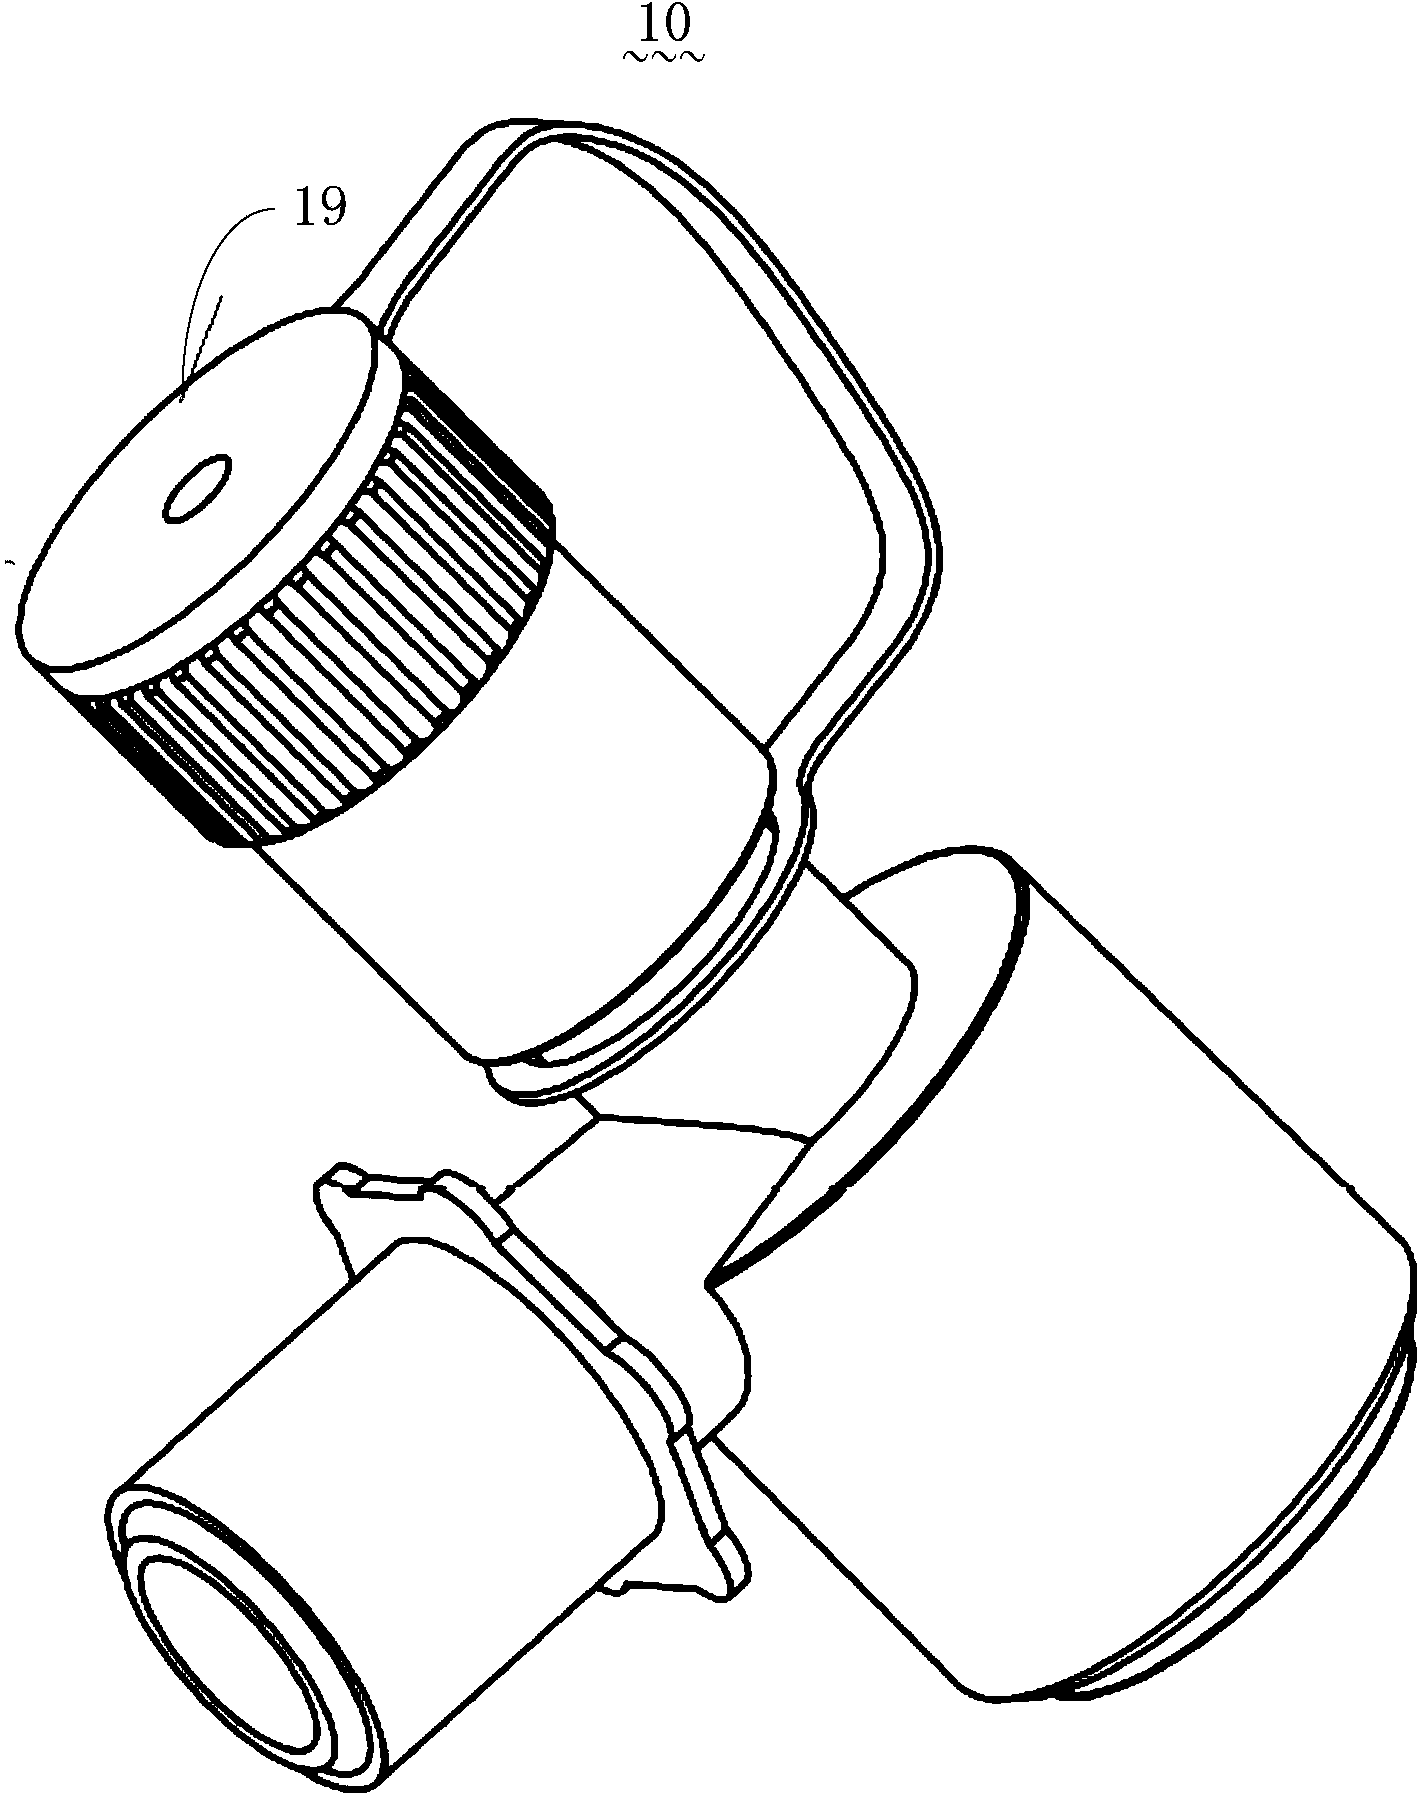 Bronchoscopy adaptor